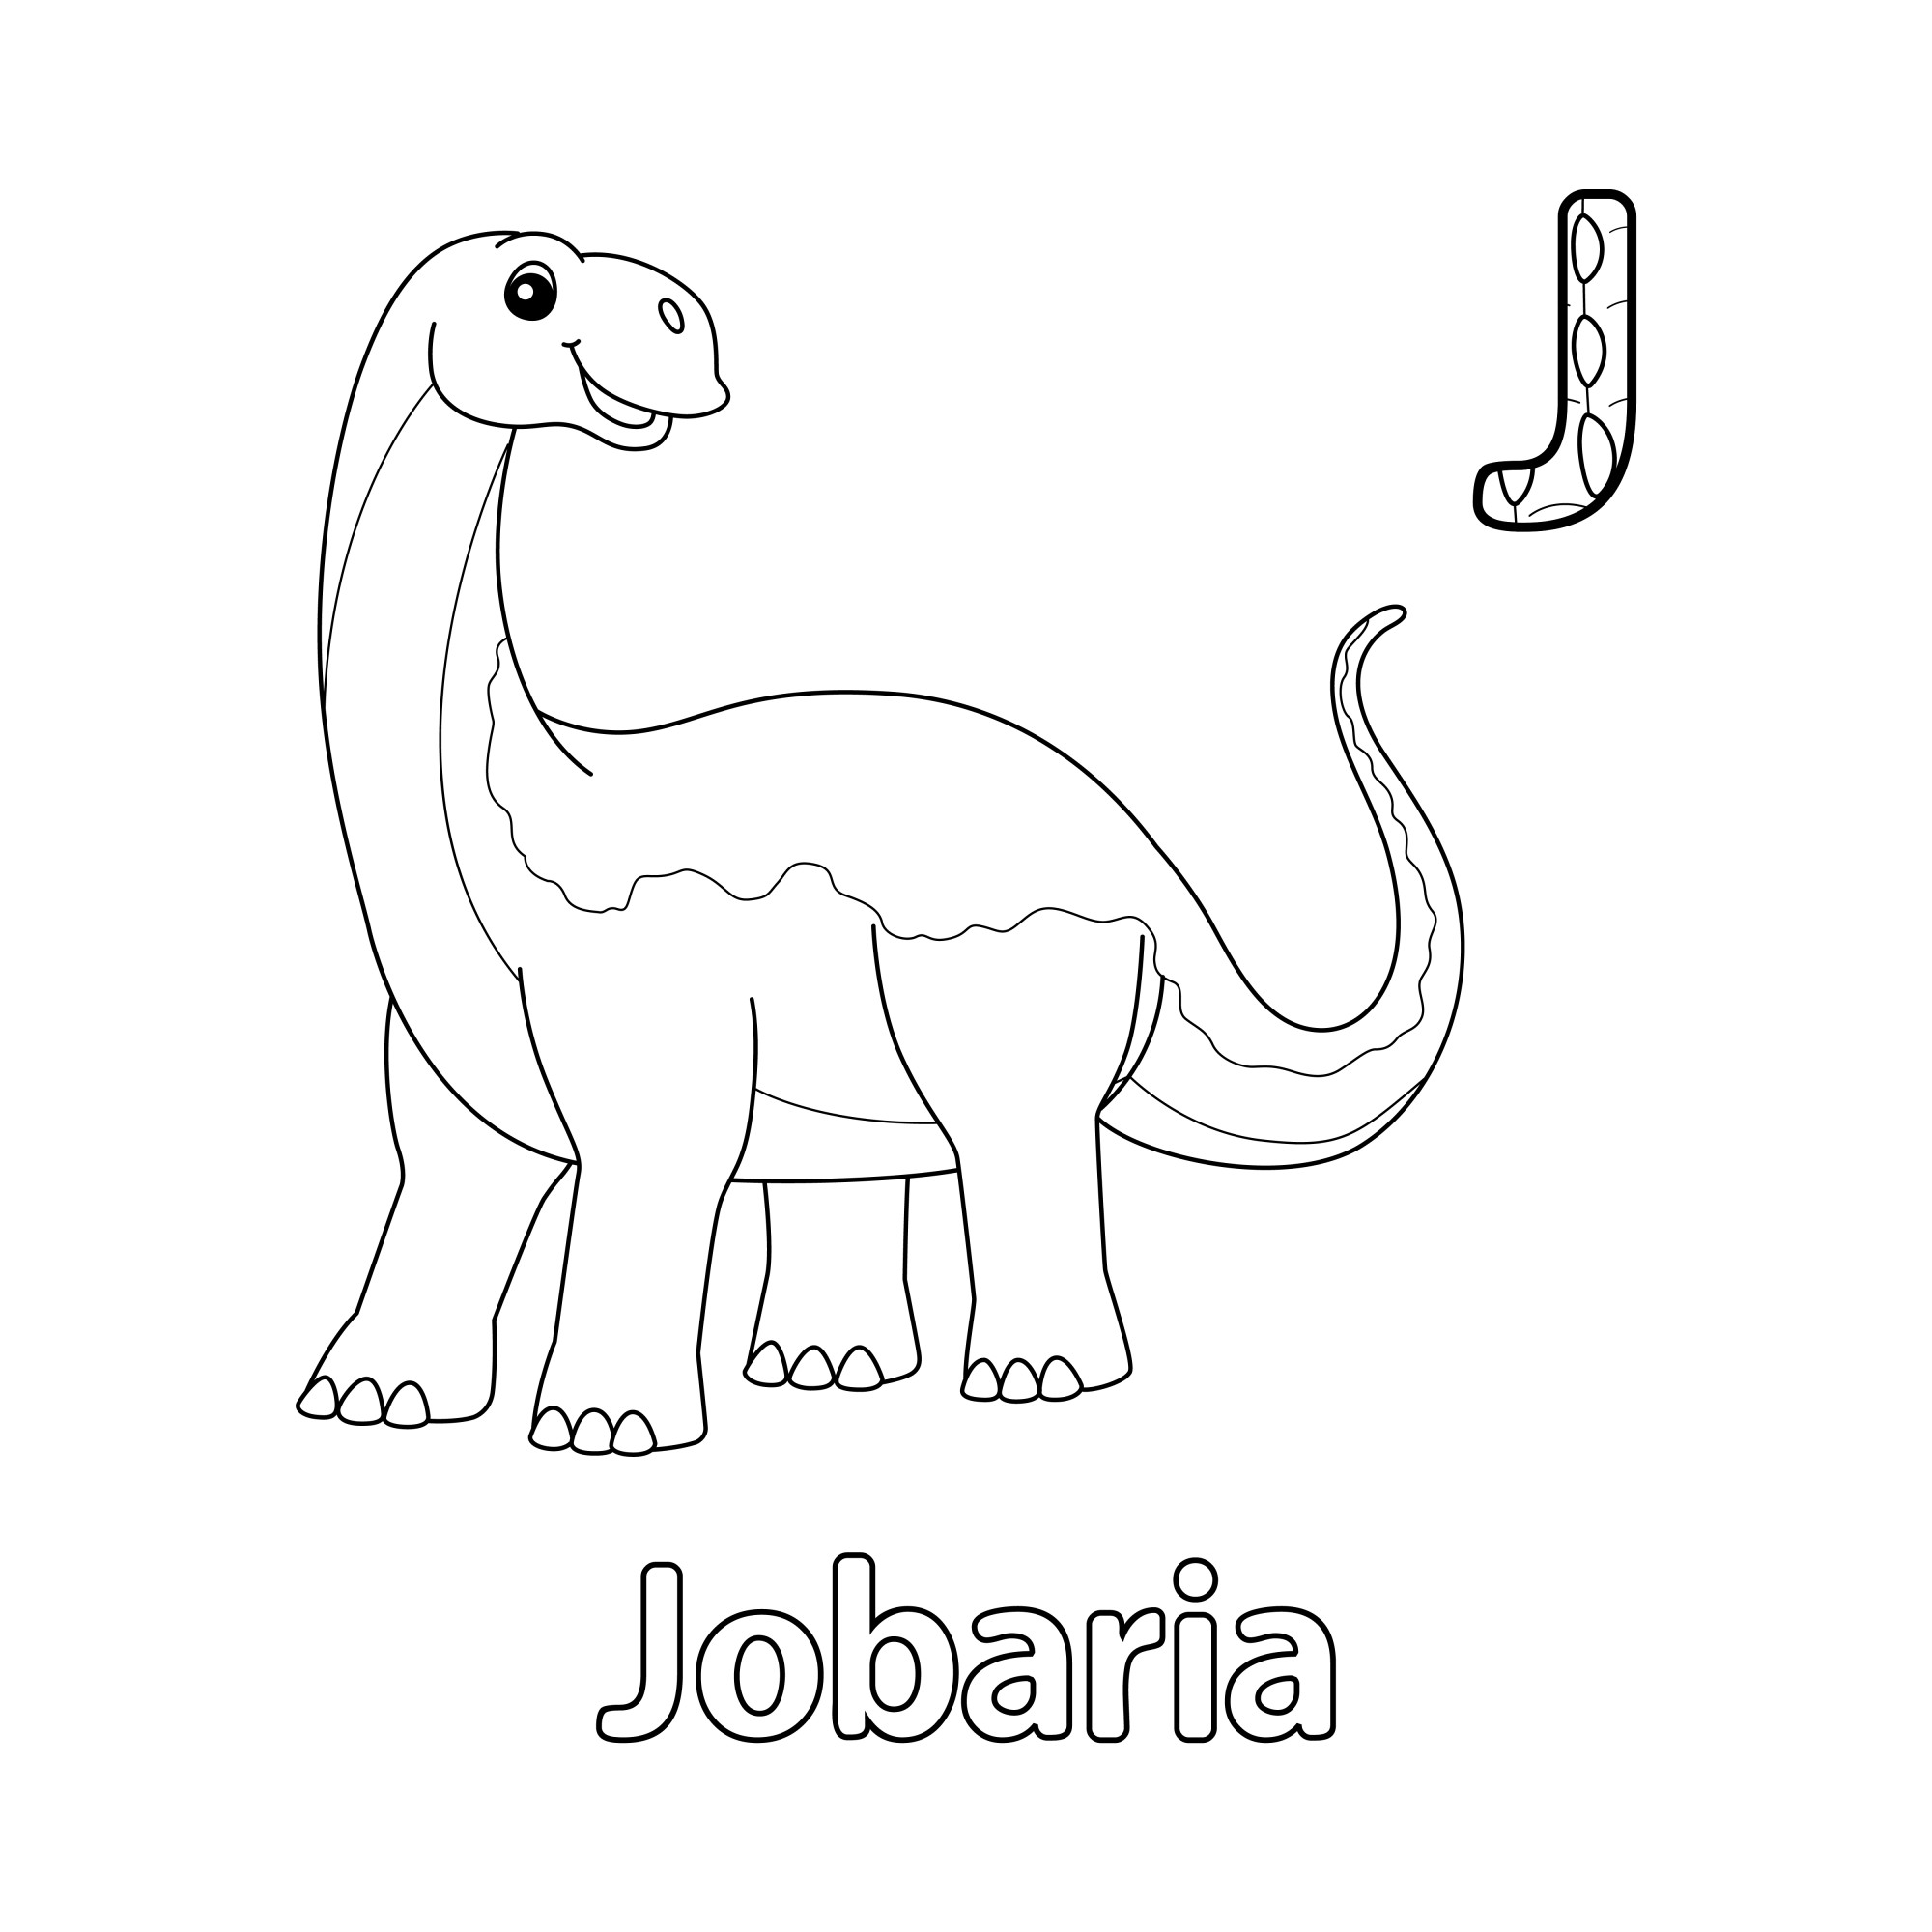 Раскраска для детей: буква J английского алфавита